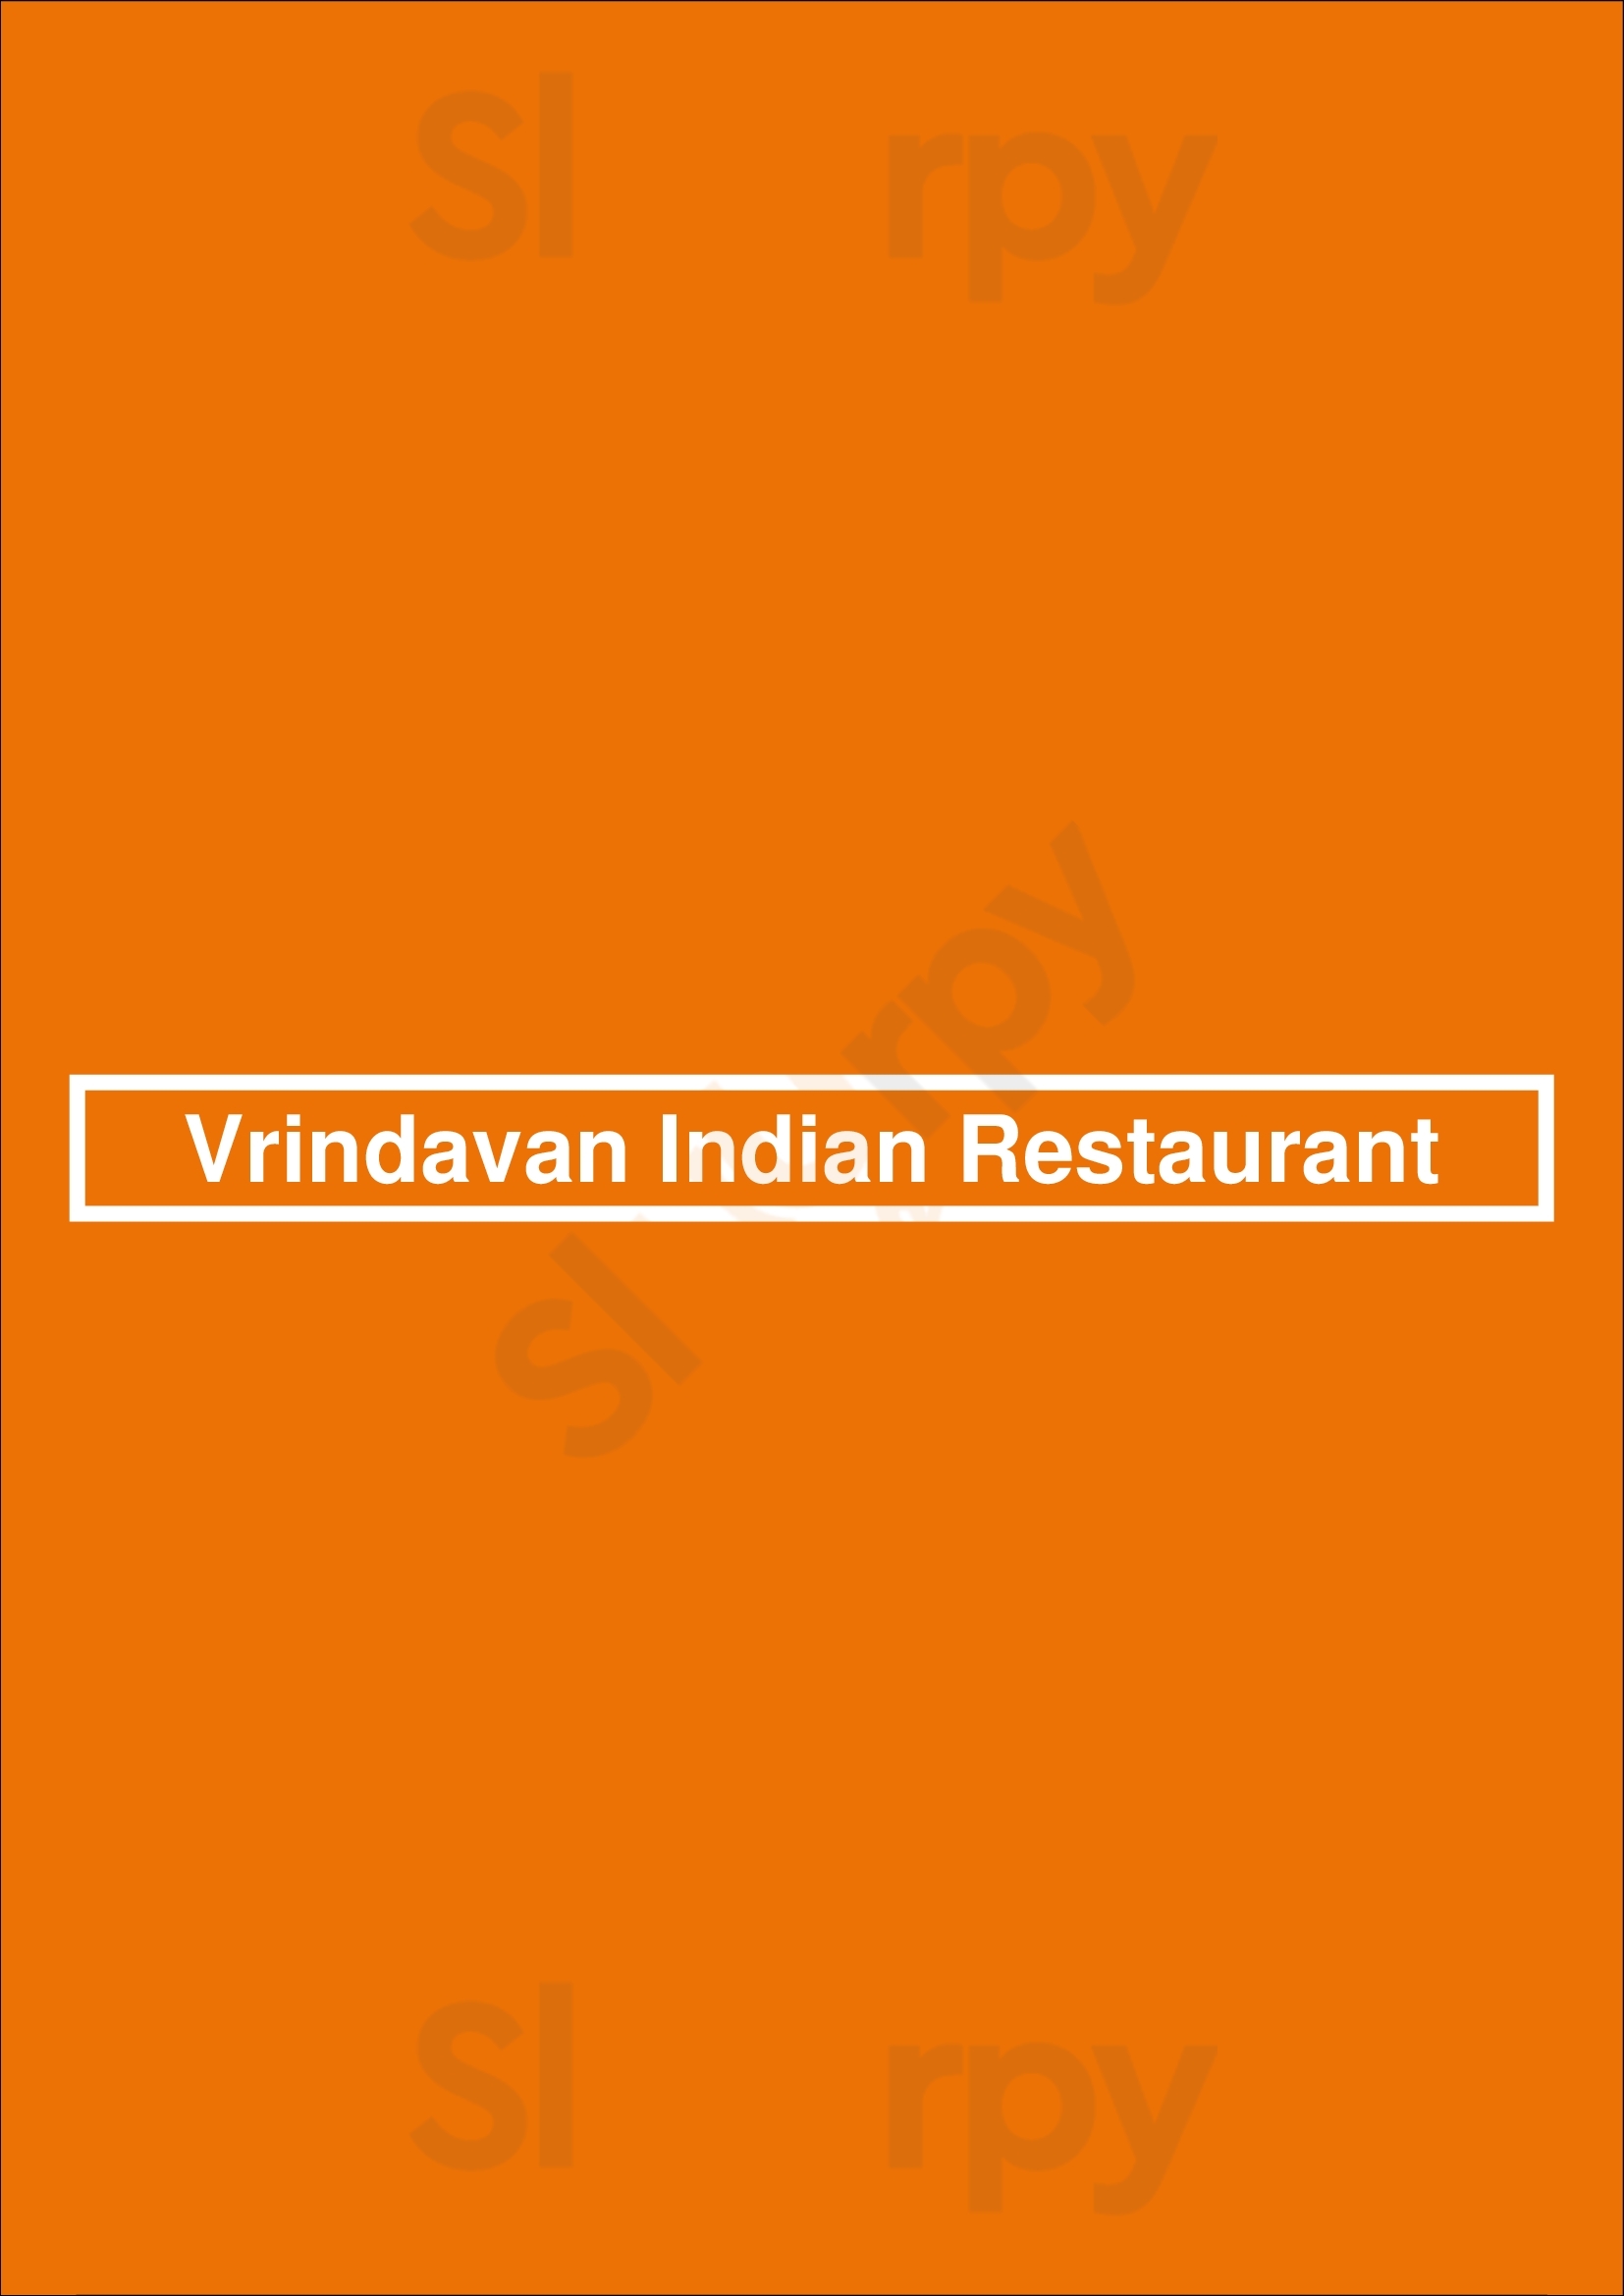 Vrindavan Indian Restaurant Sydney Menu - 1